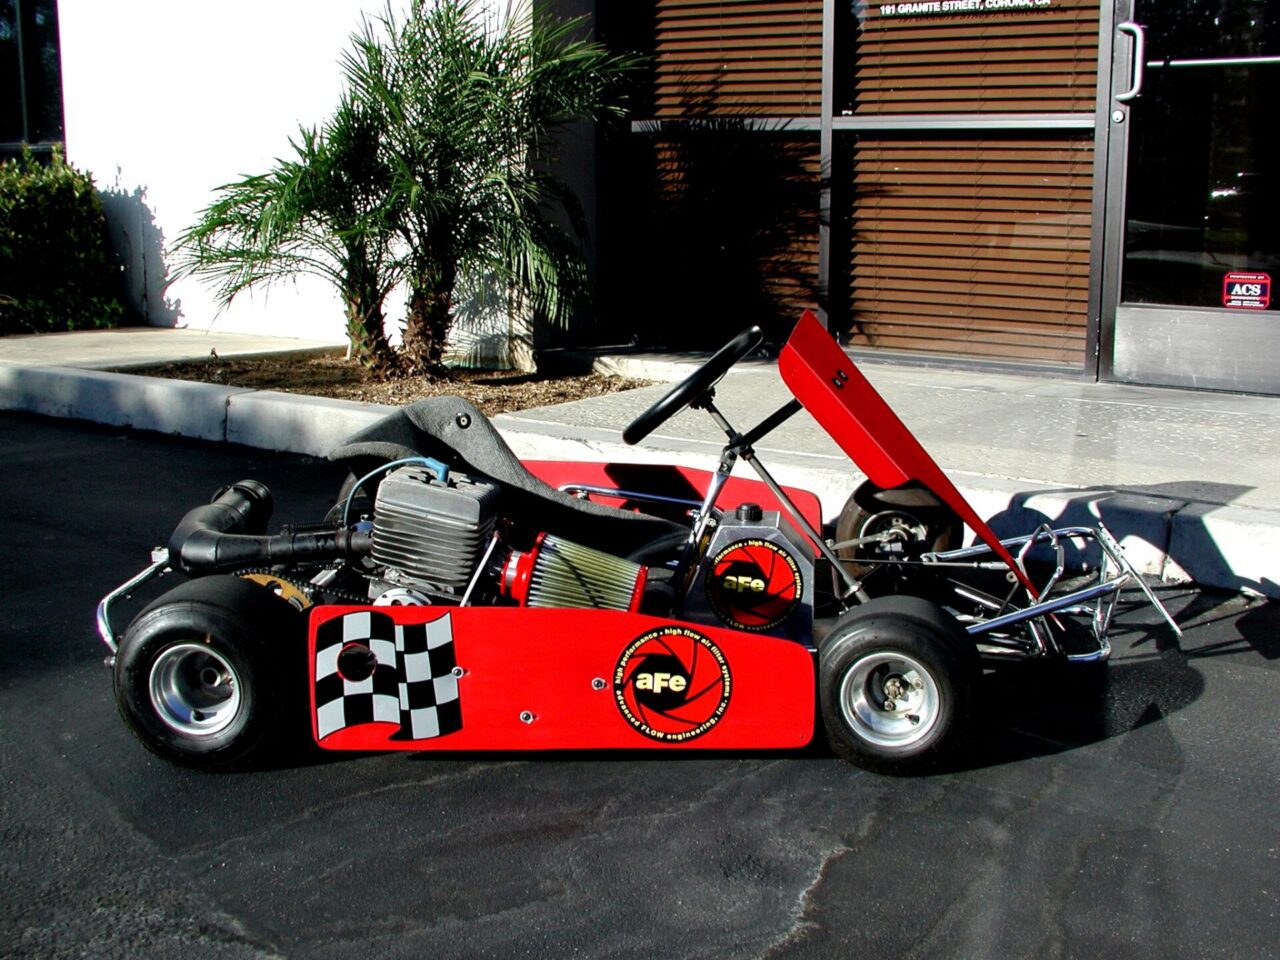 DIY racing go cart with custom aFe racing filter on it in Corona CA 